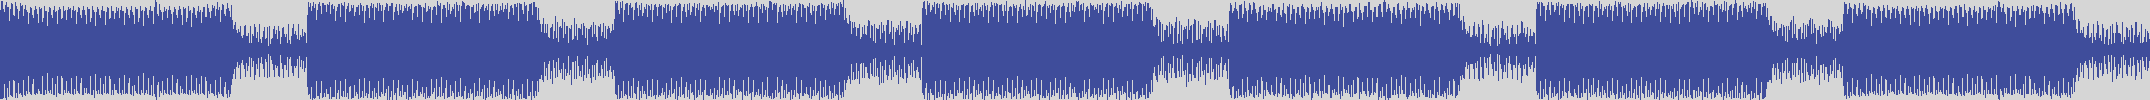 nf_boyz_records [NFY054] Zorrotech - In the Funka [Bla Bla Mix] audio wave form